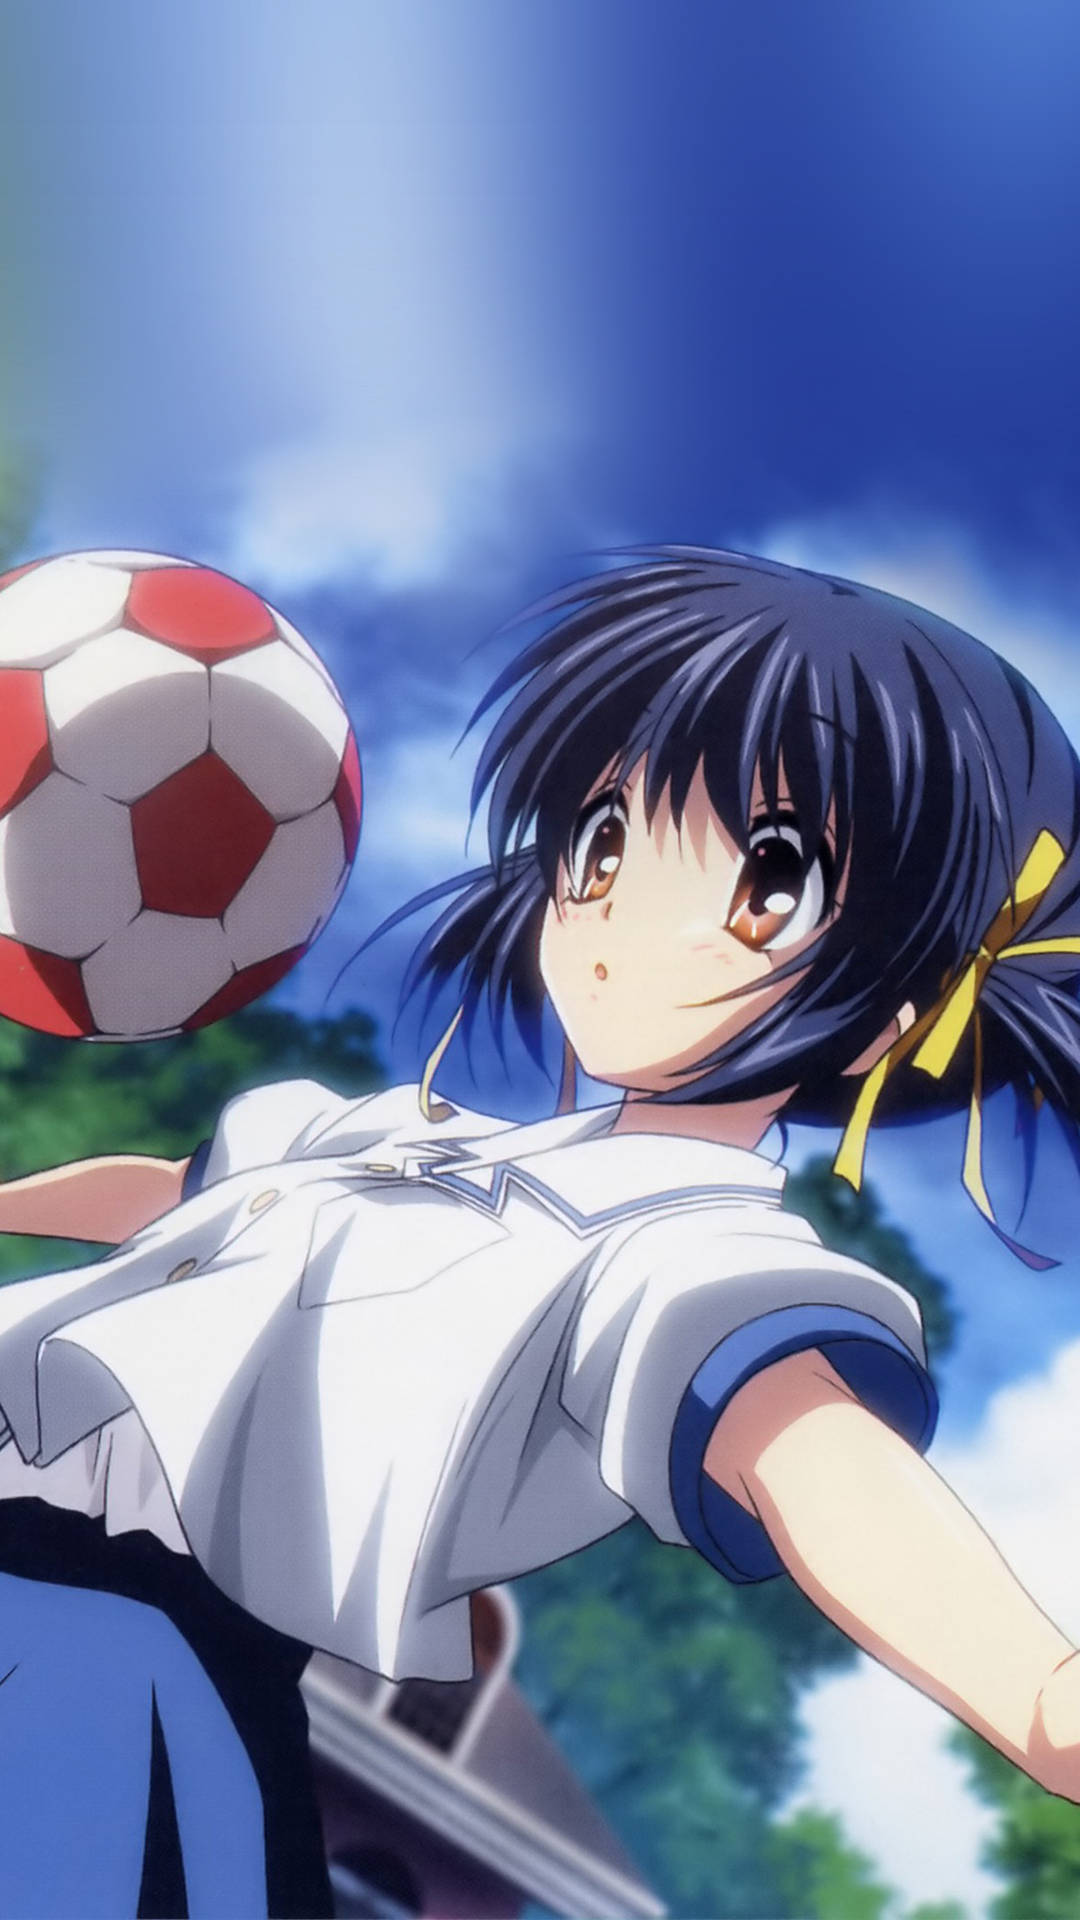 Anime Art Girl Playing Soccer Background